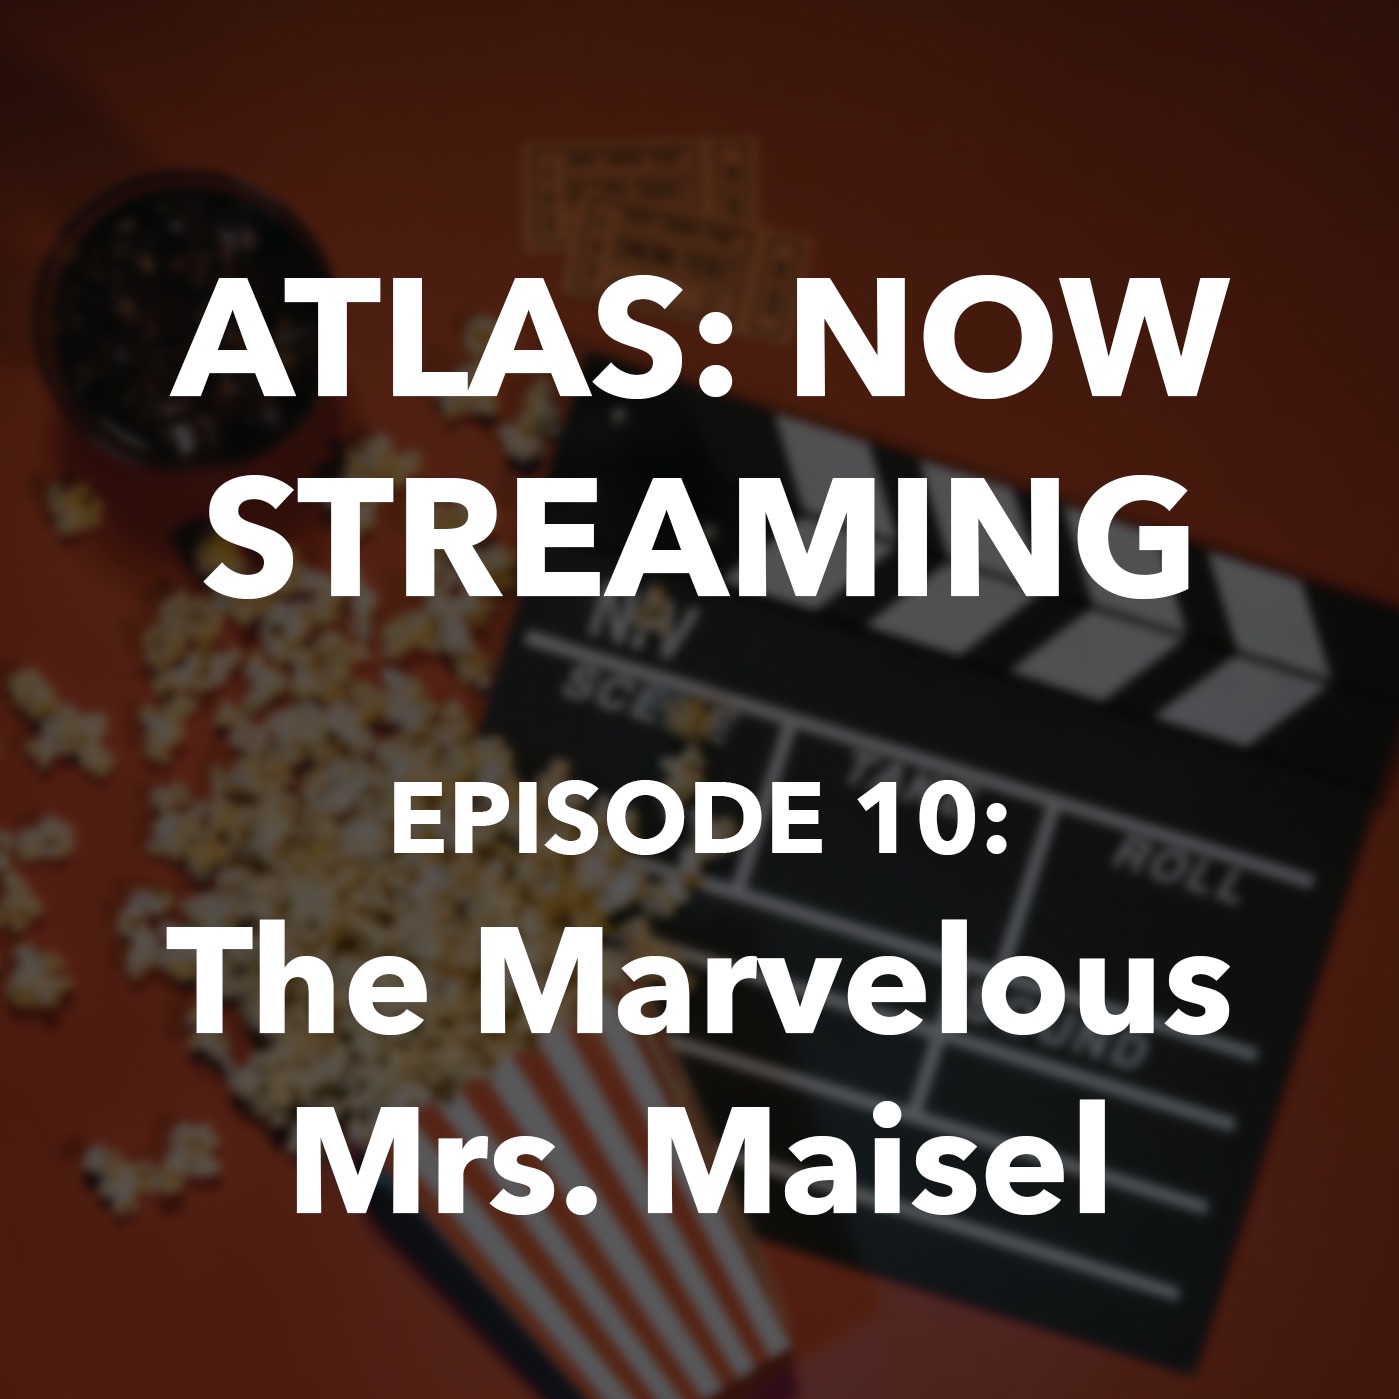 Atlas: Now Streaming Episode 10 - The Marvelous Mrs. Maisel